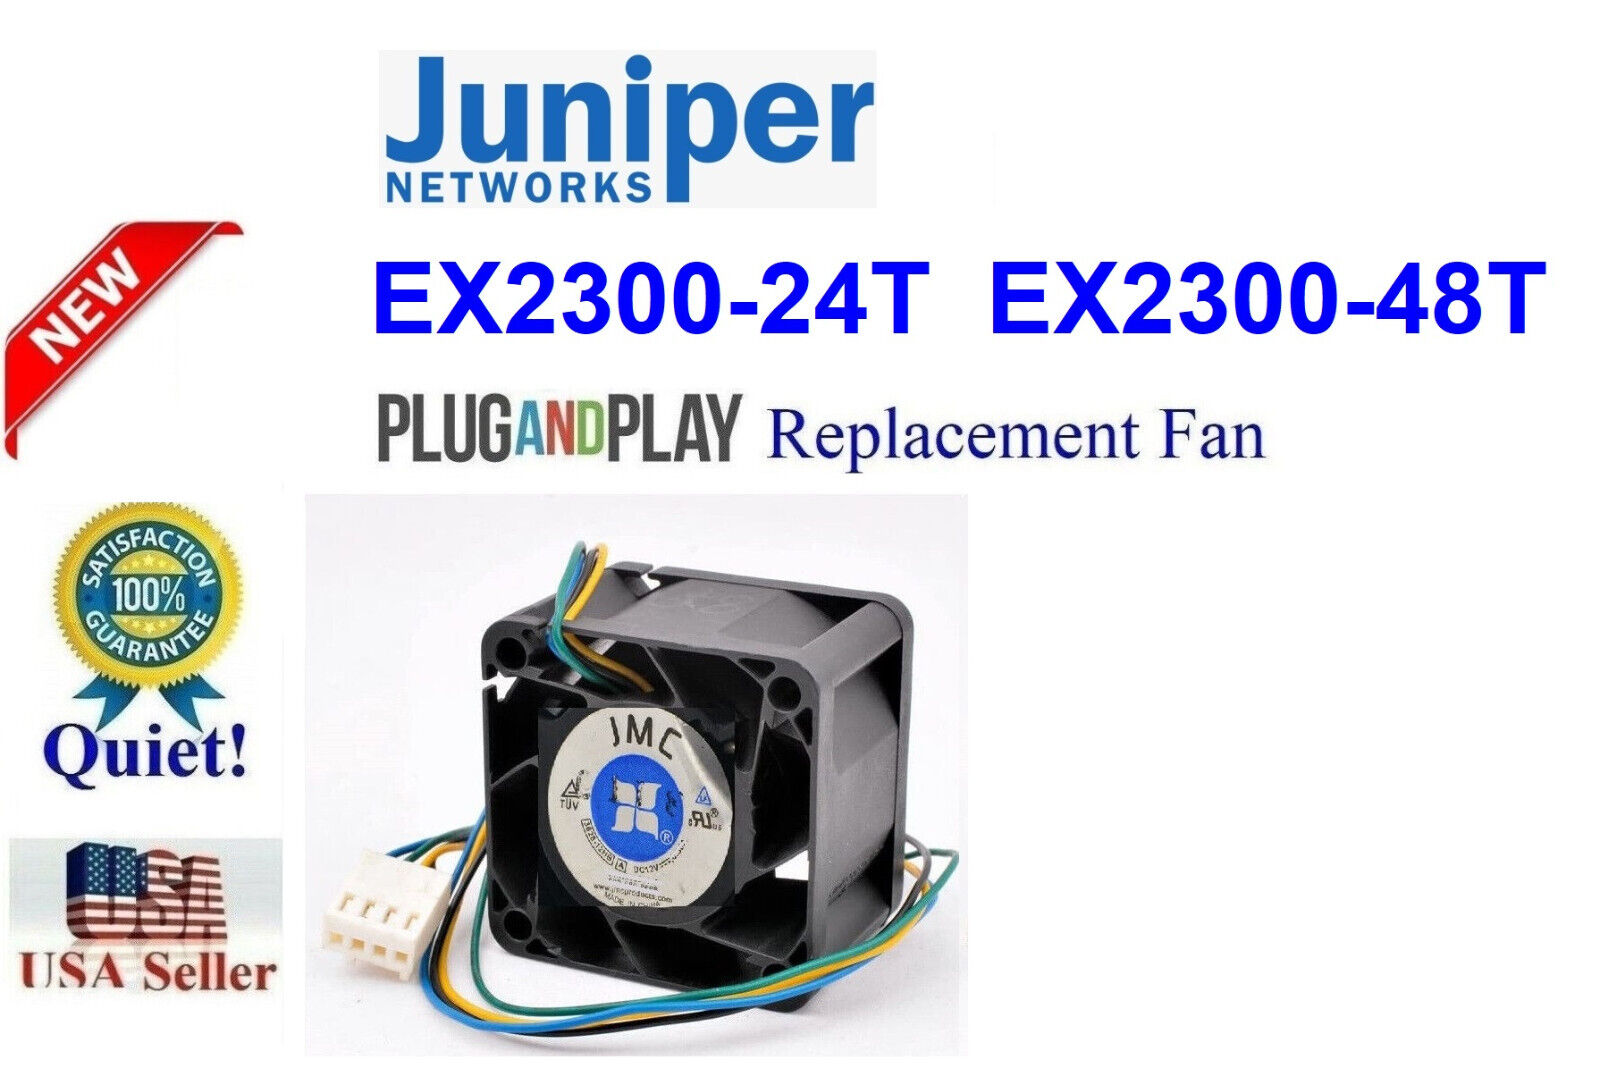 1x Quiet Replacement Fan for Juniper Networks EX2300-24T EX2300-48T